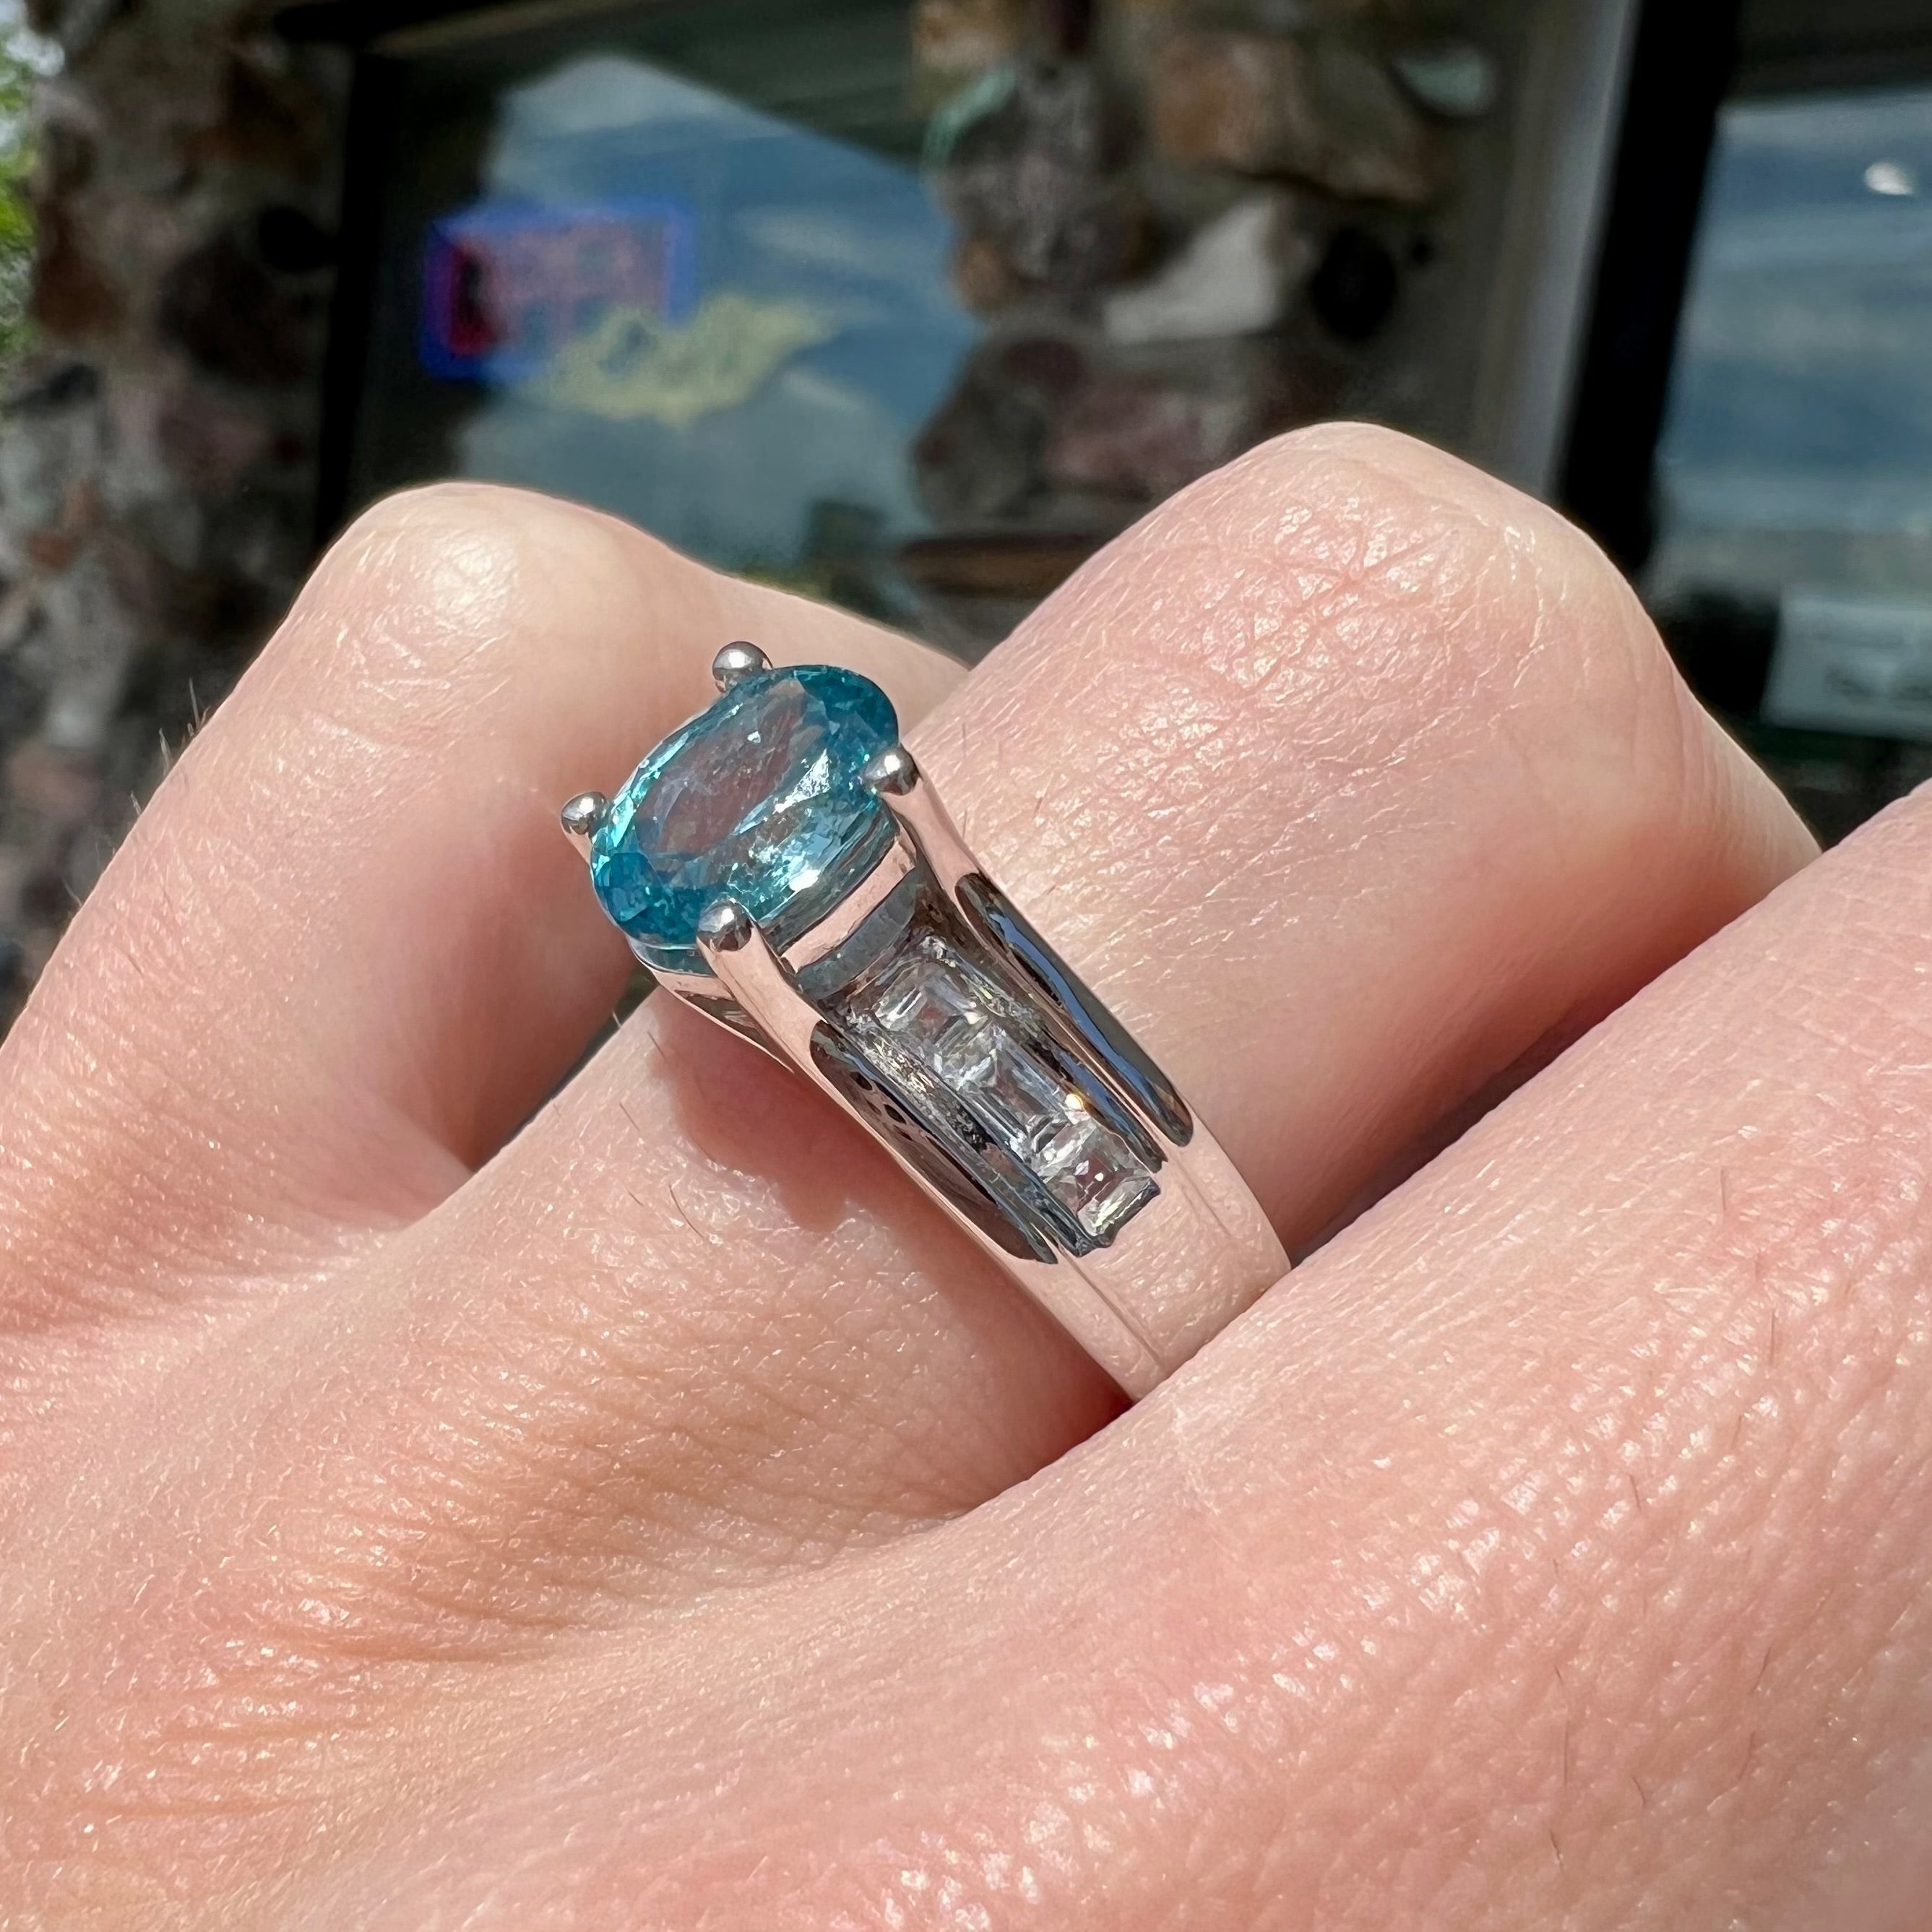 Buy Precious blue sapphire silver ring - September birthstone gift ideas  online at aStudio1980.com